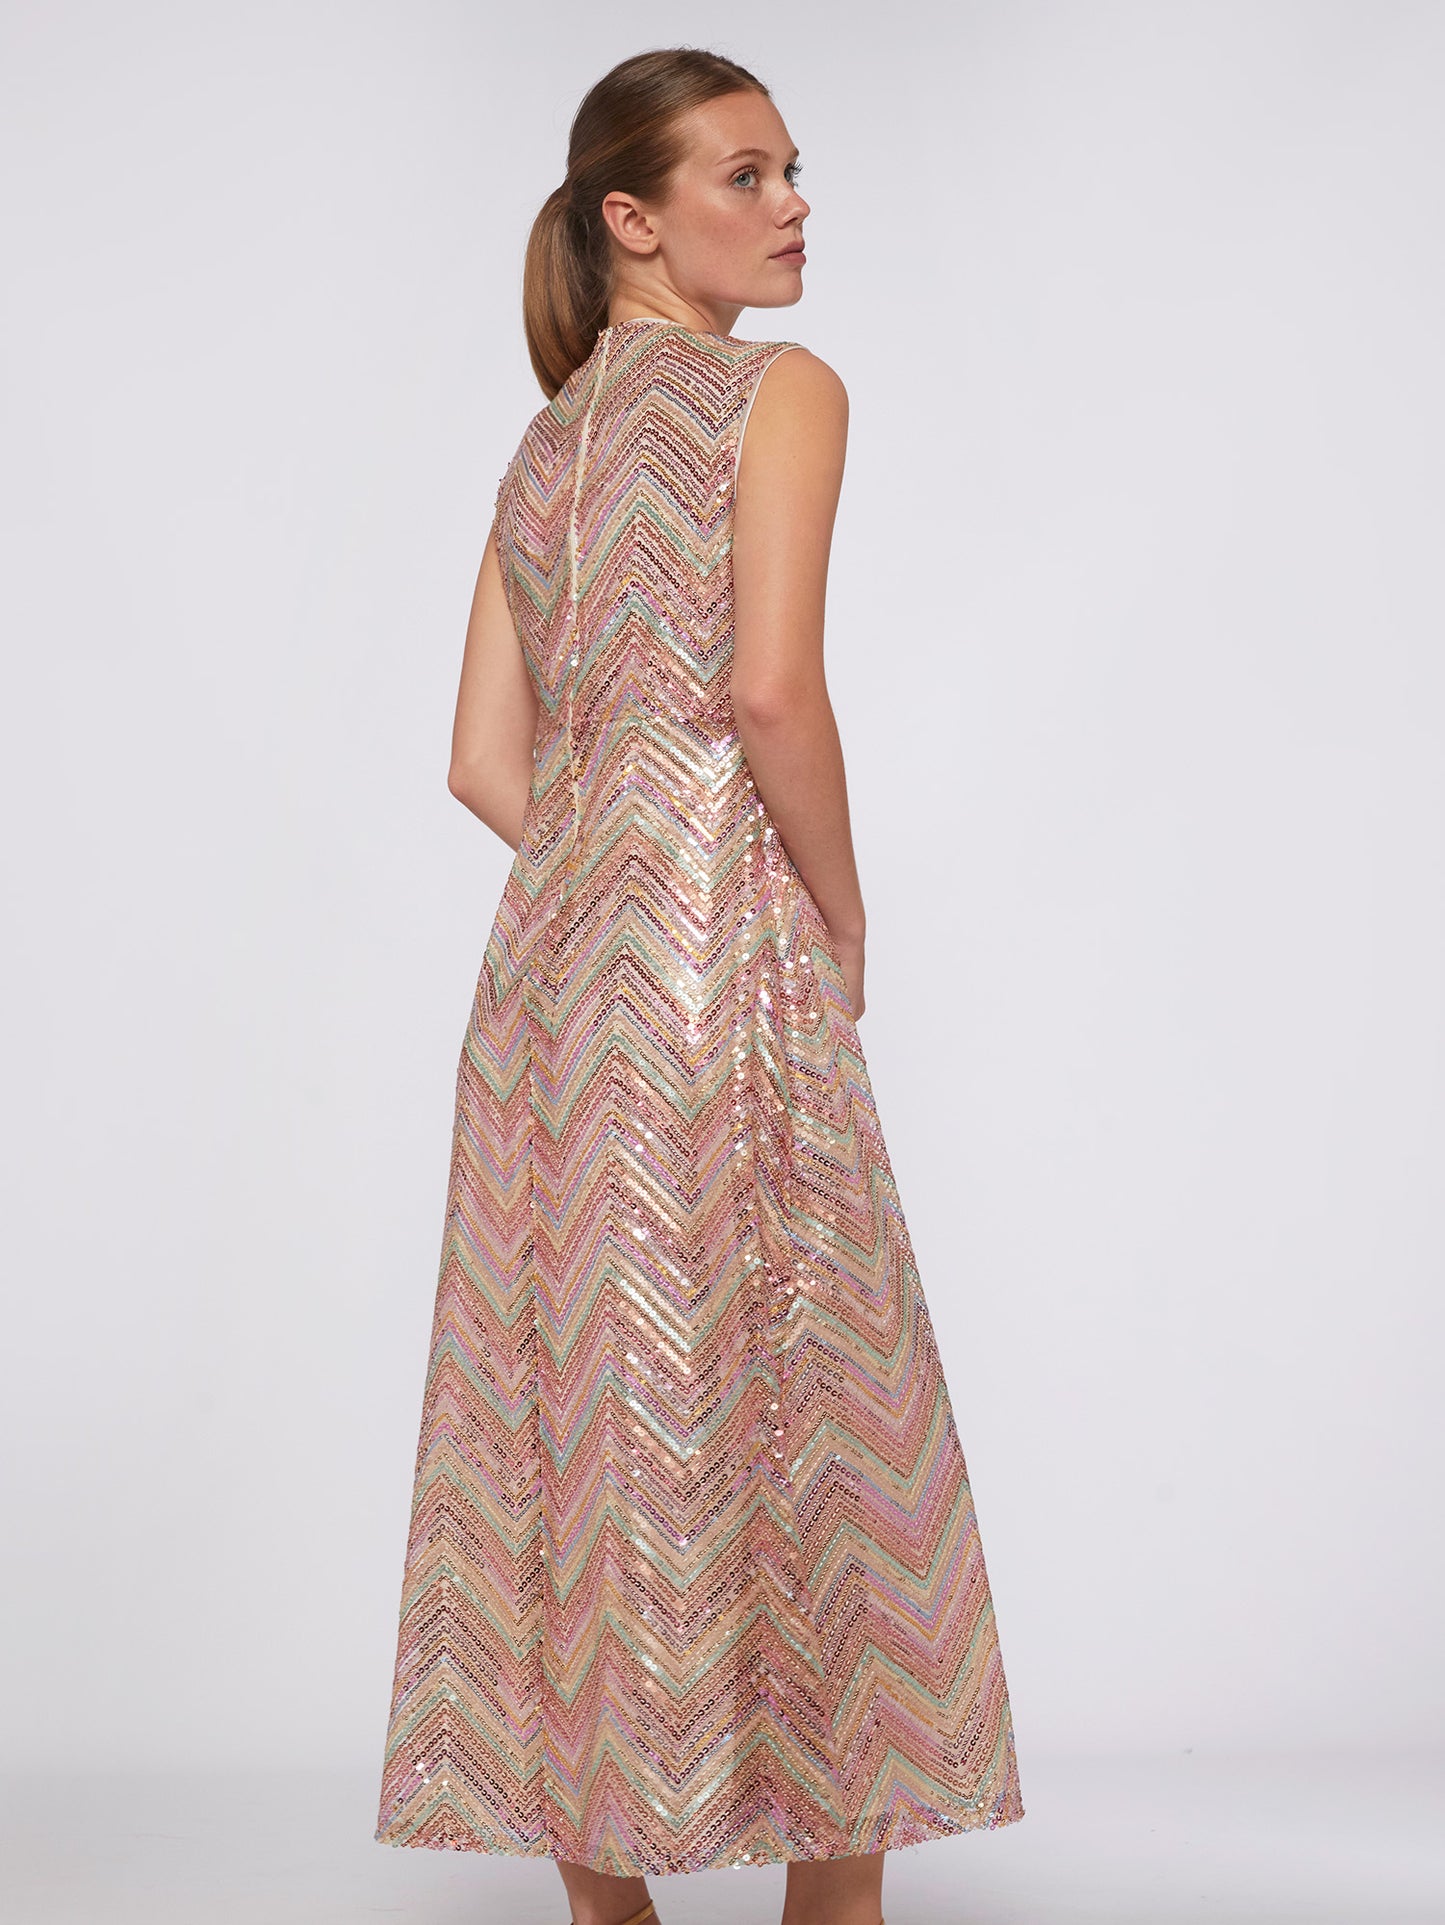 Sequin Pattern Dress